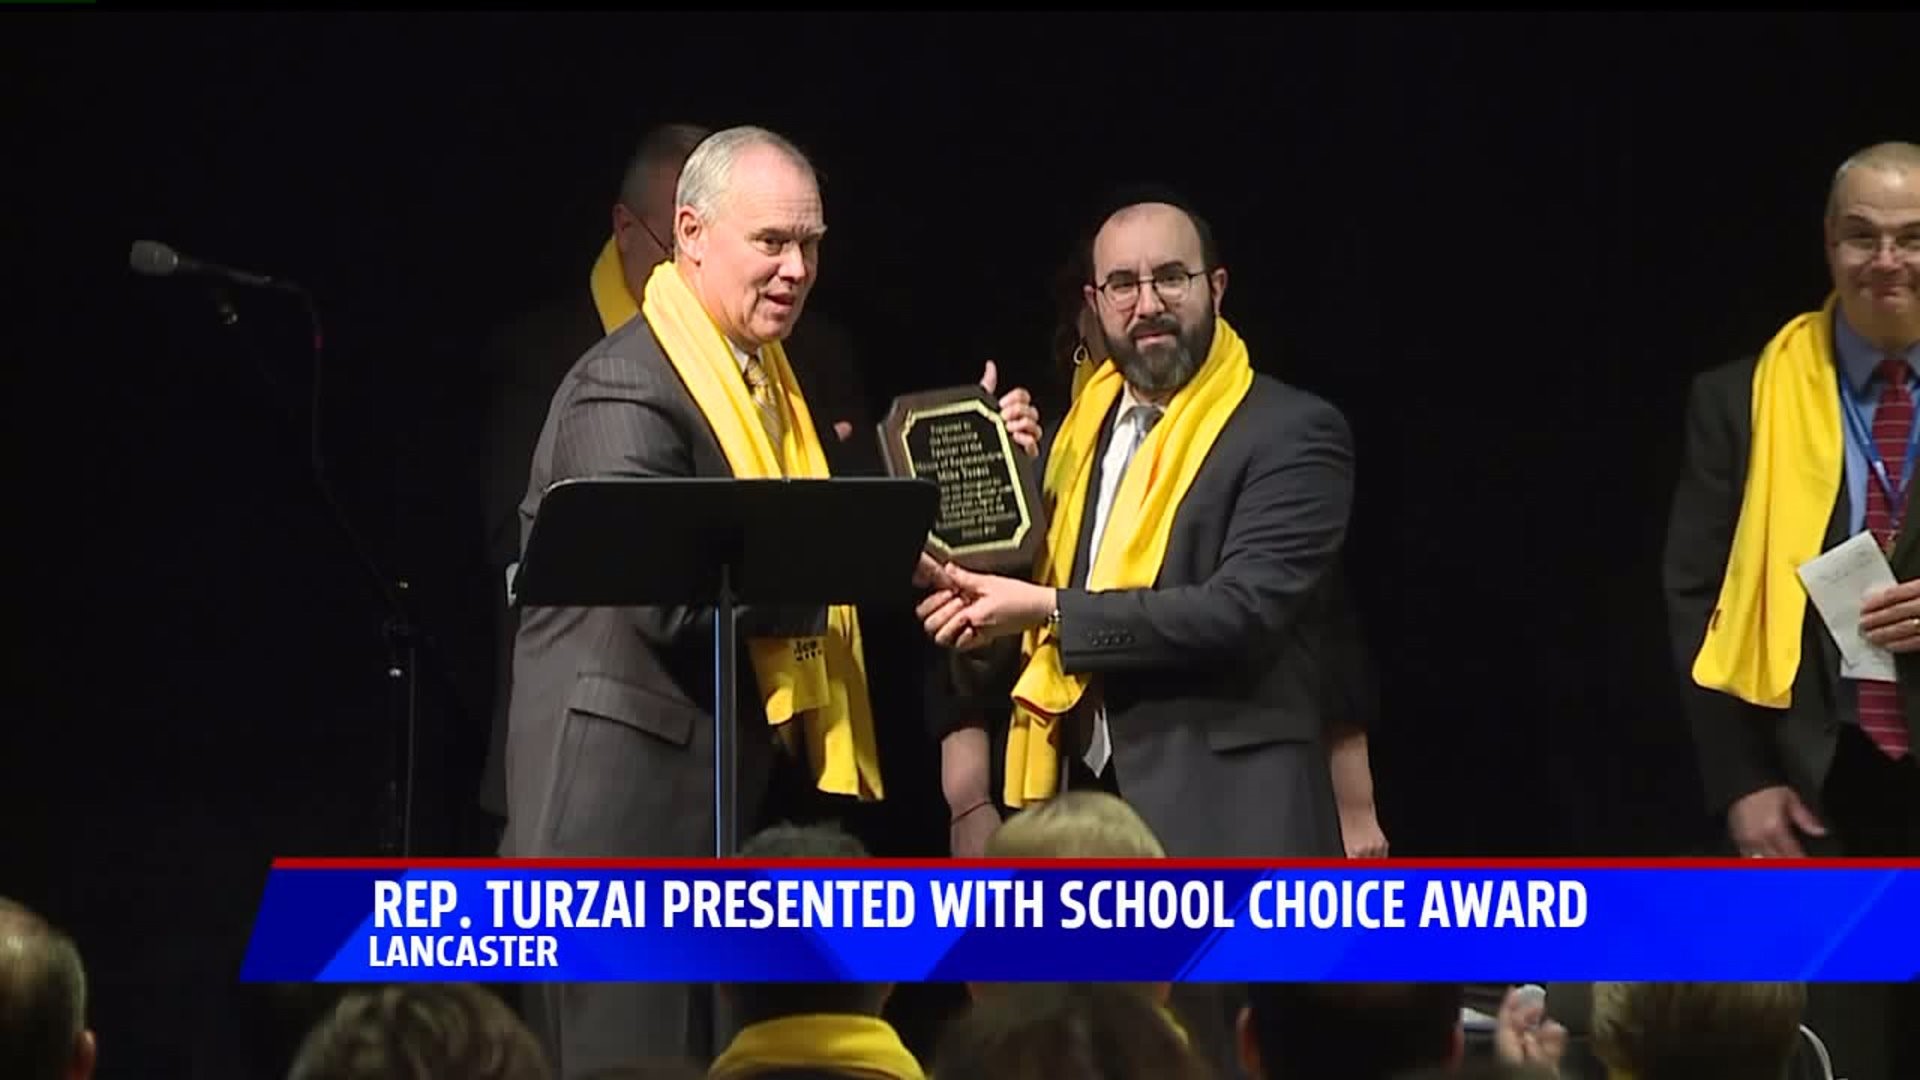 REP. TURZAI PRESENTED WITH SCHOOL CHOICE AWARD